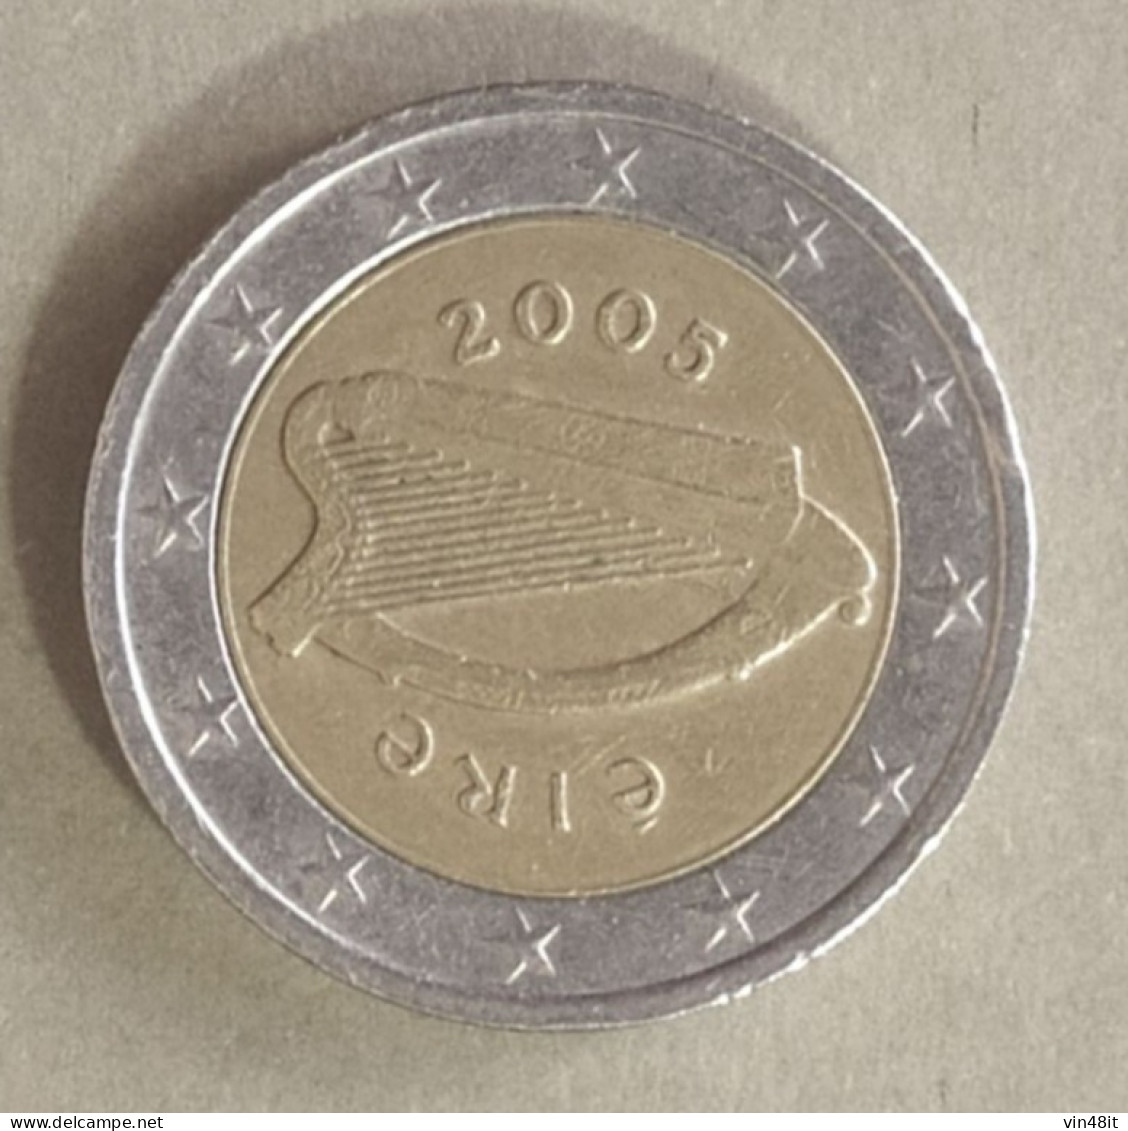 2005 - IRLANDA  - MONETA IN EURO - DEL VALORE DI  2,00  EURO  - USATA - Irlanda